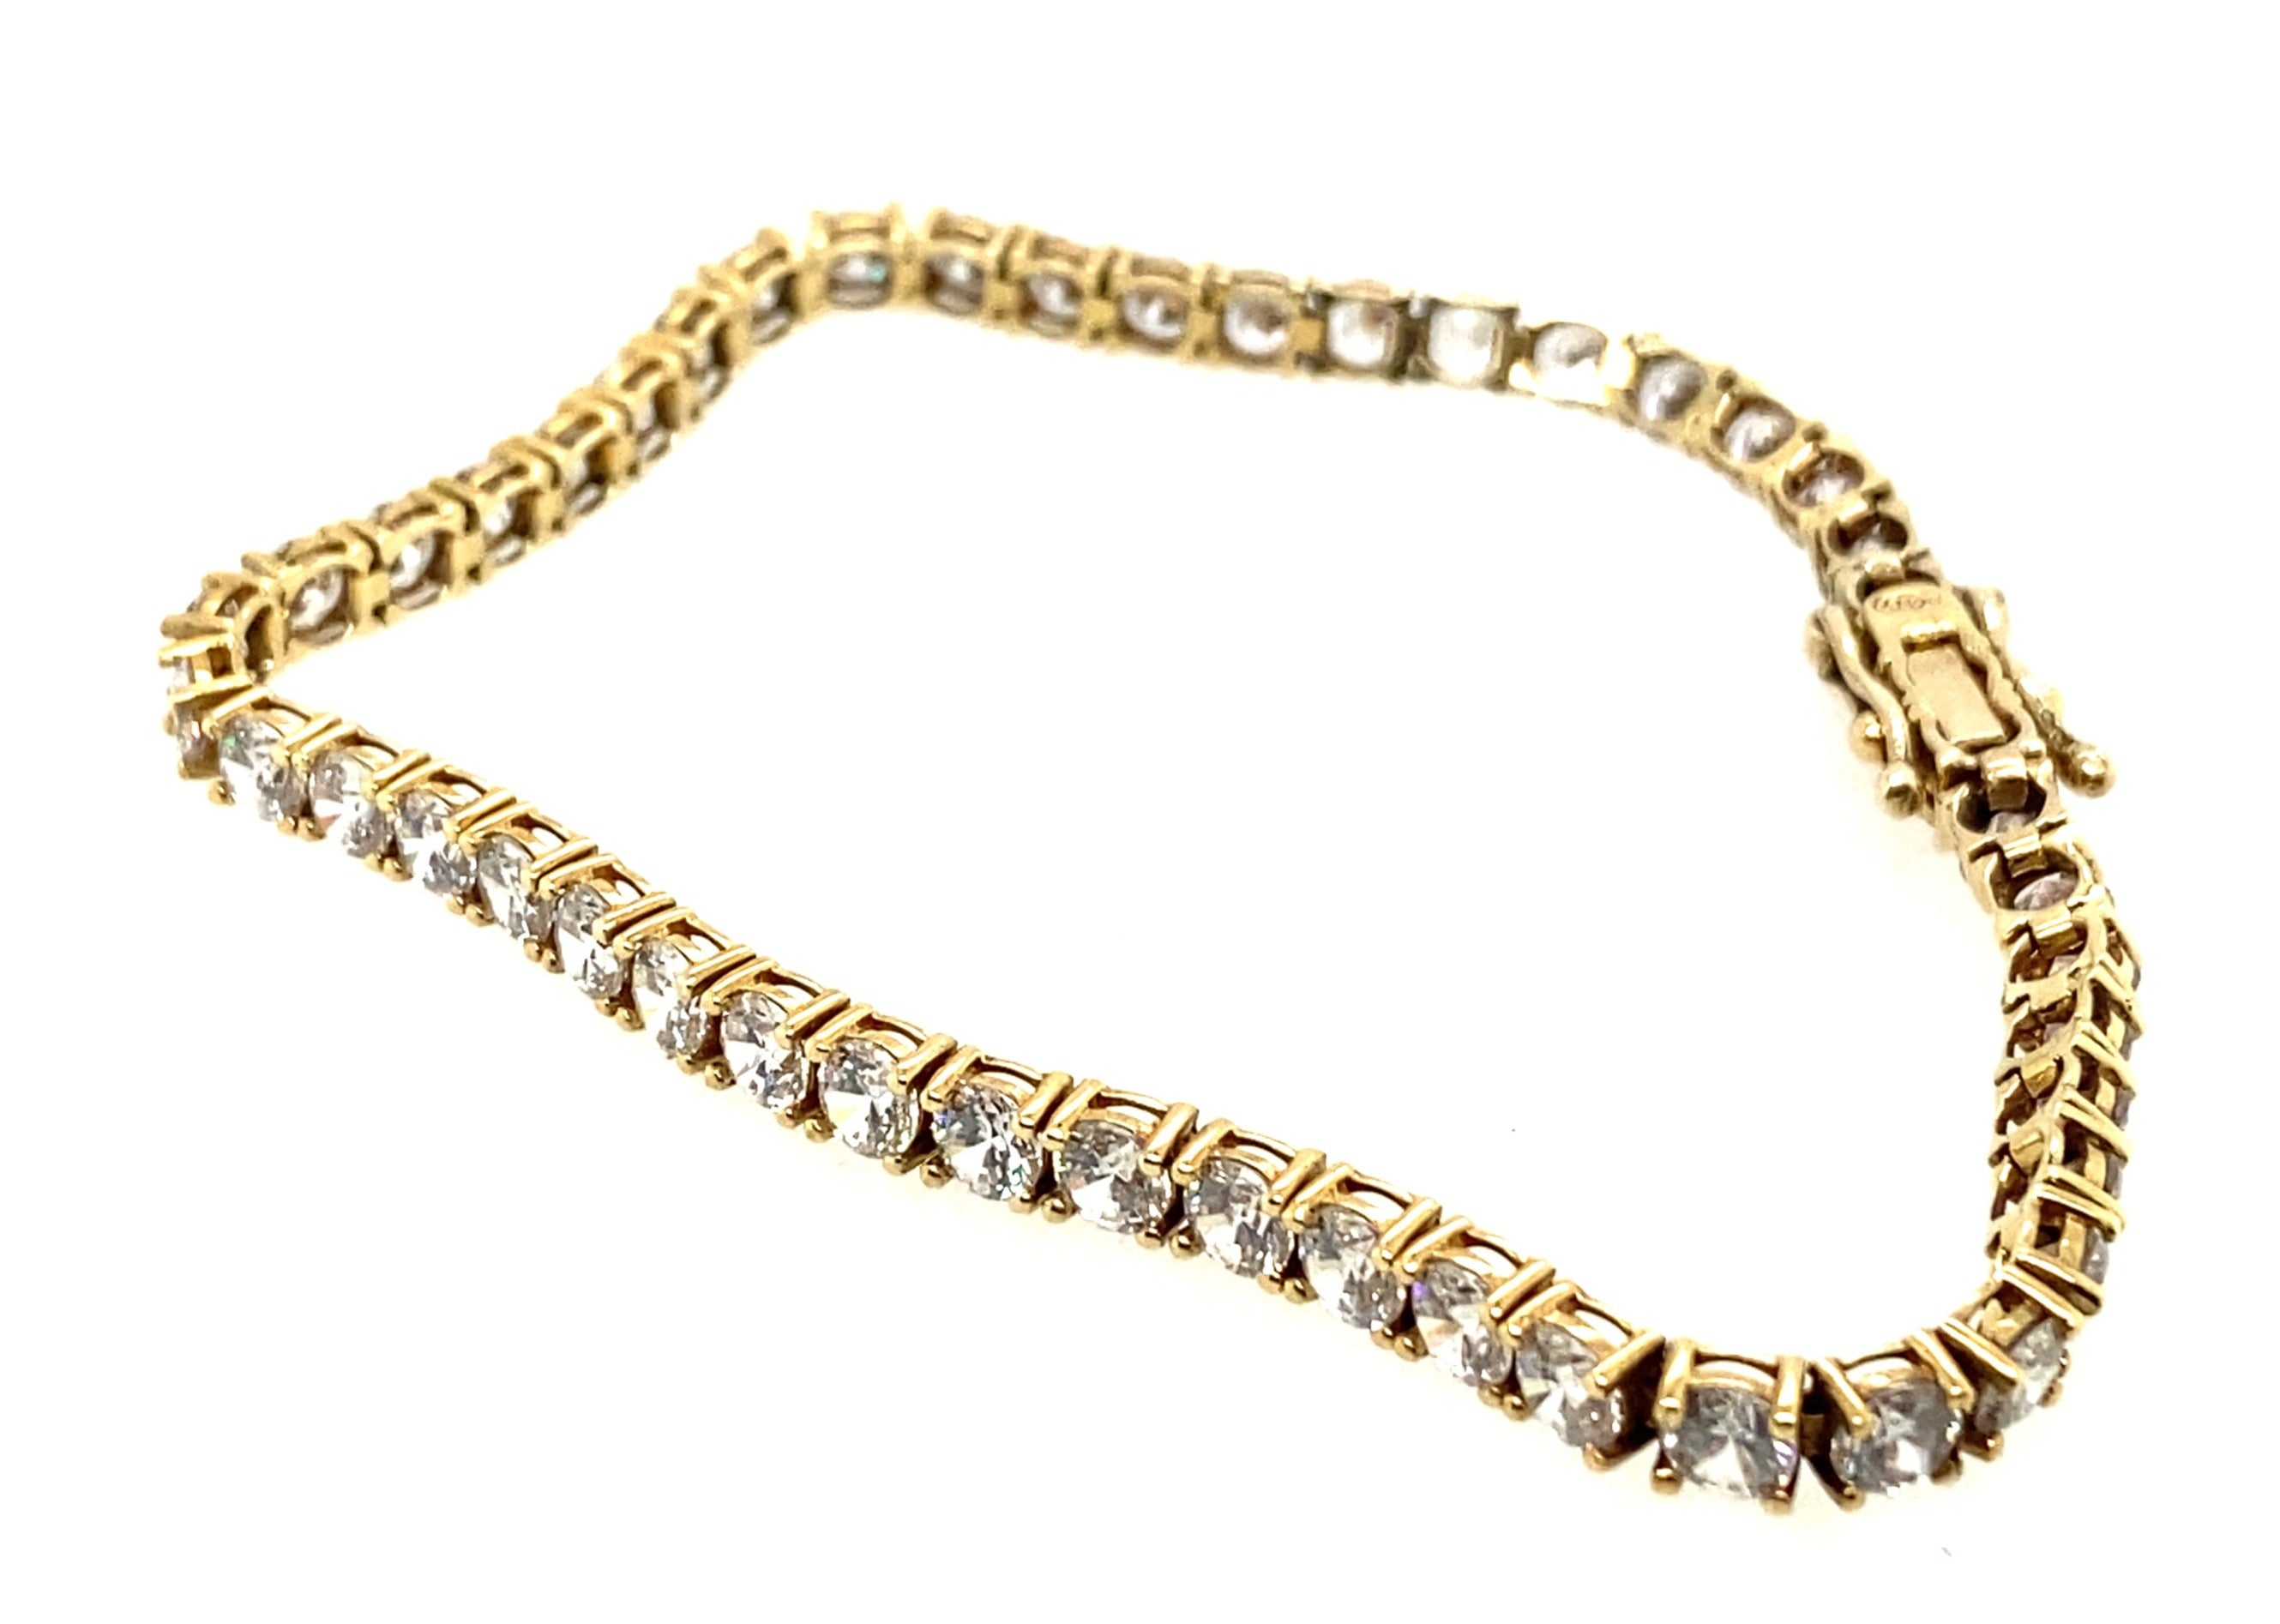 10ct Yellow Gold & Cubic Zirconia Tennis Bracelet